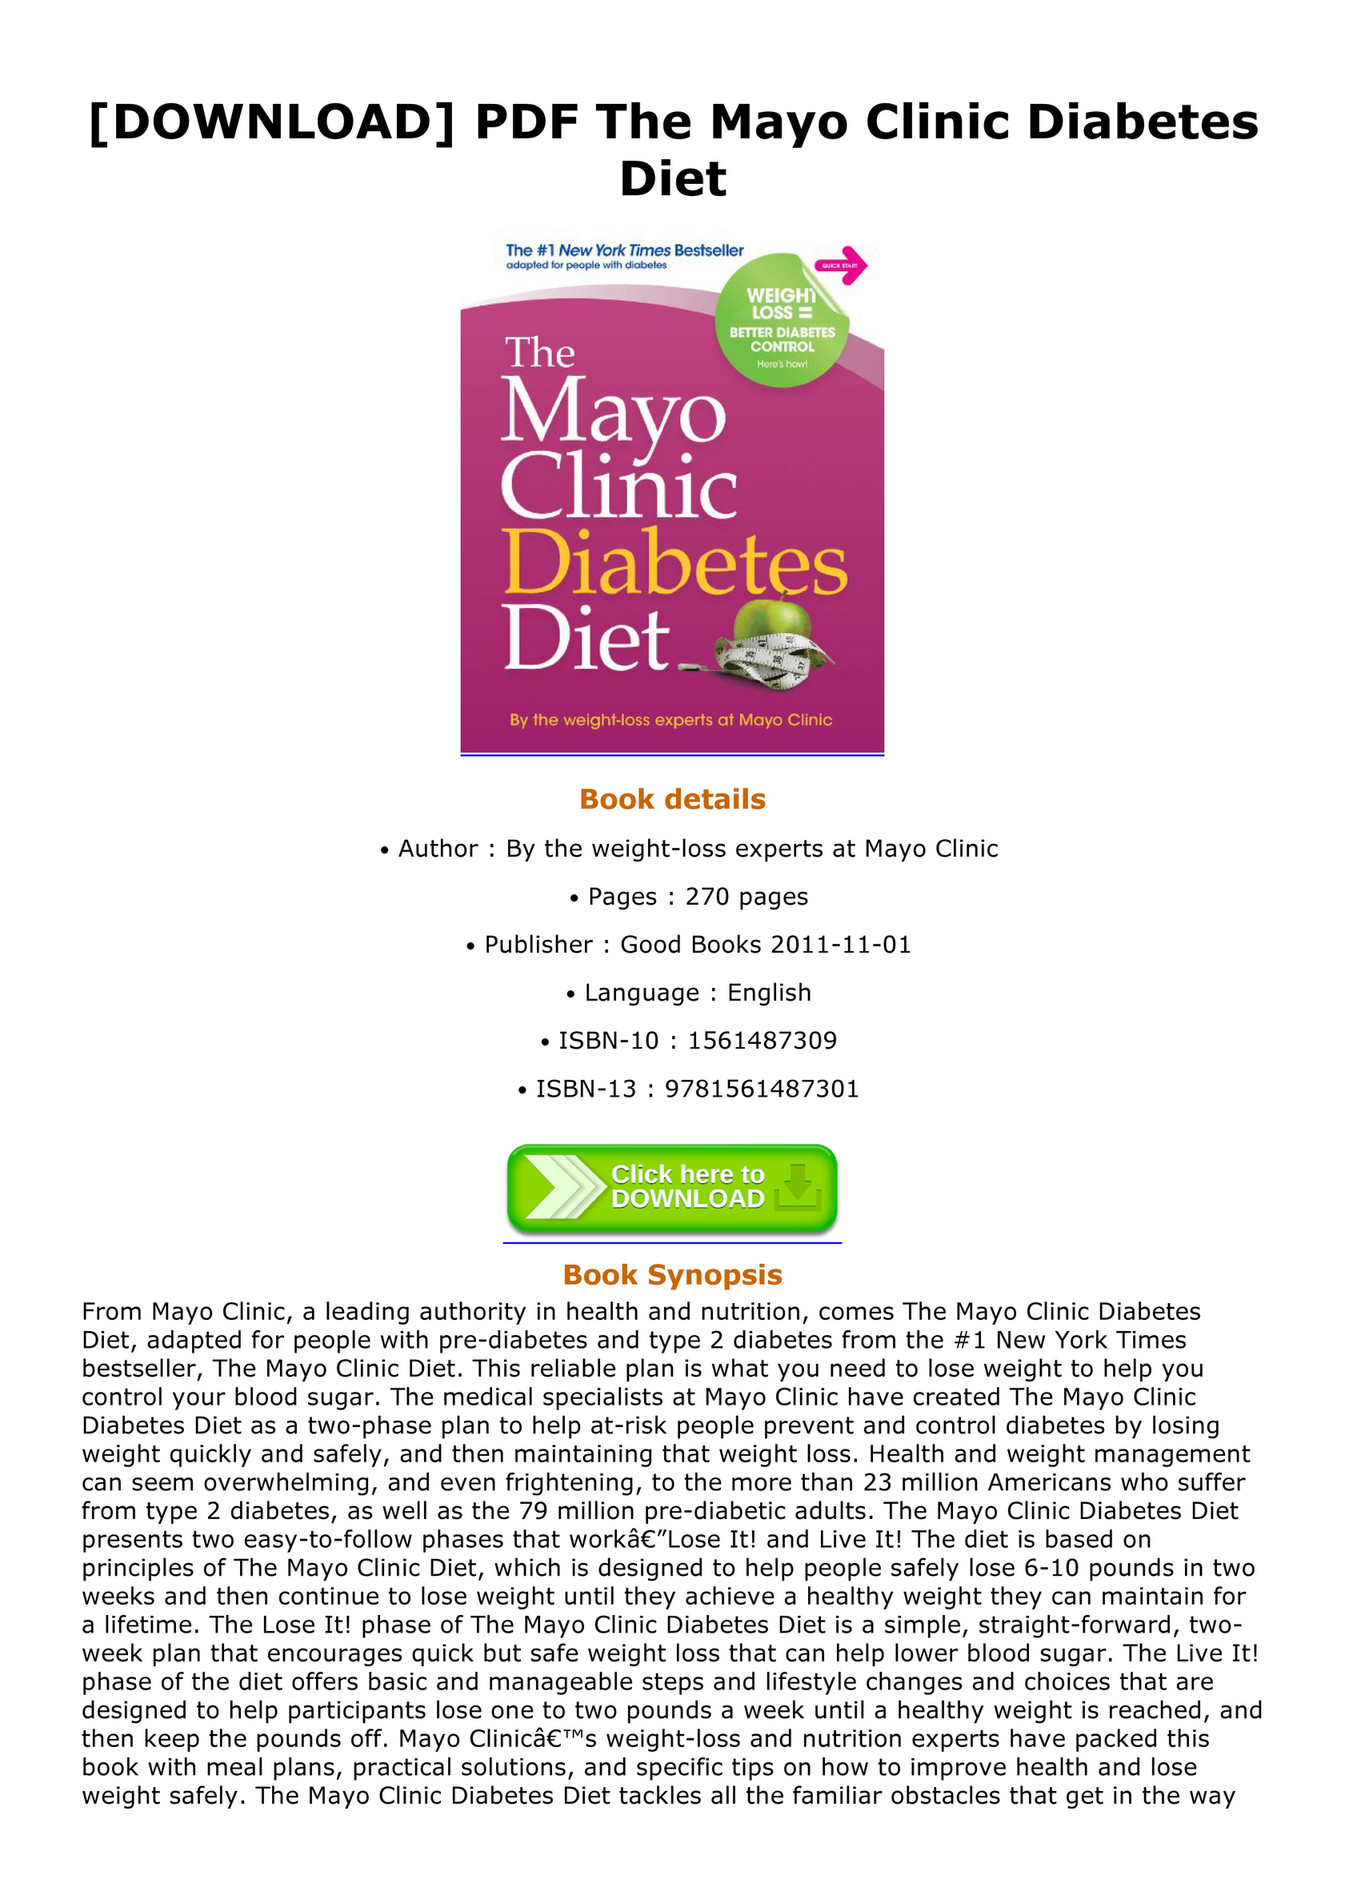 diet and diabetes book pdf